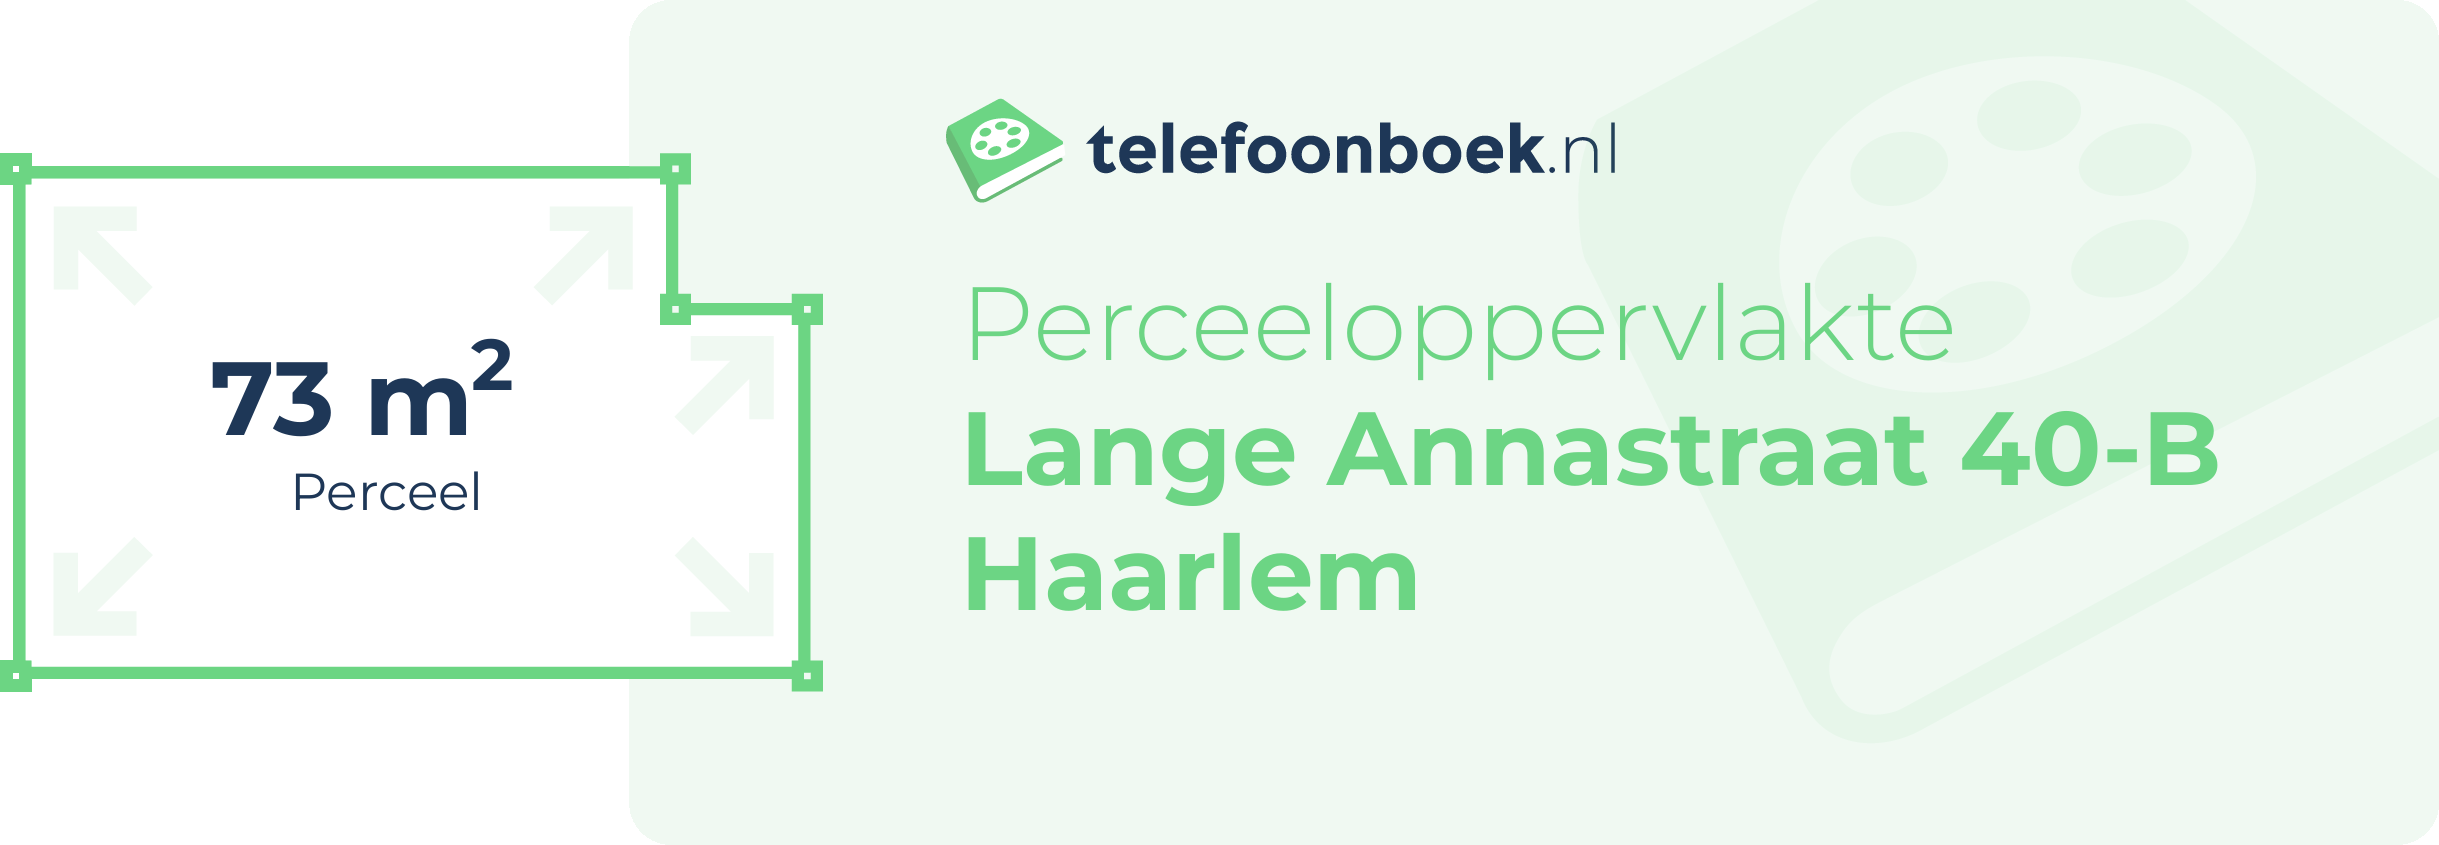 Perceeloppervlakte Lange Annastraat 40-B Haarlem